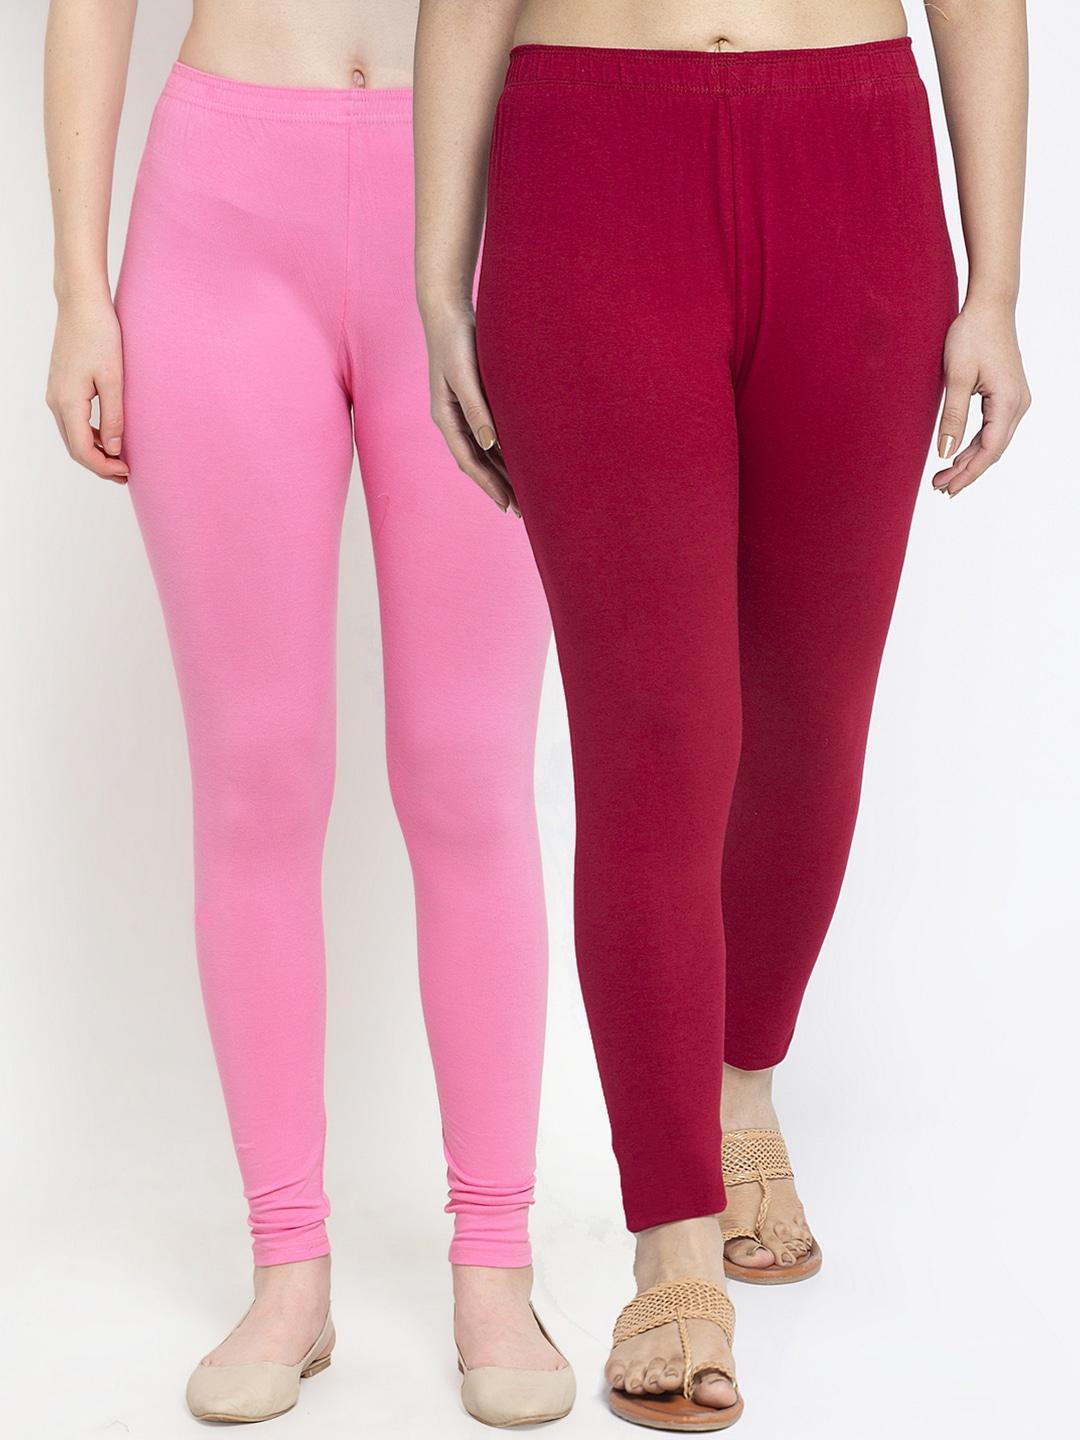 gracit-women-pack-of-2-pink-&-maroon-solid-ankle-length-leggings